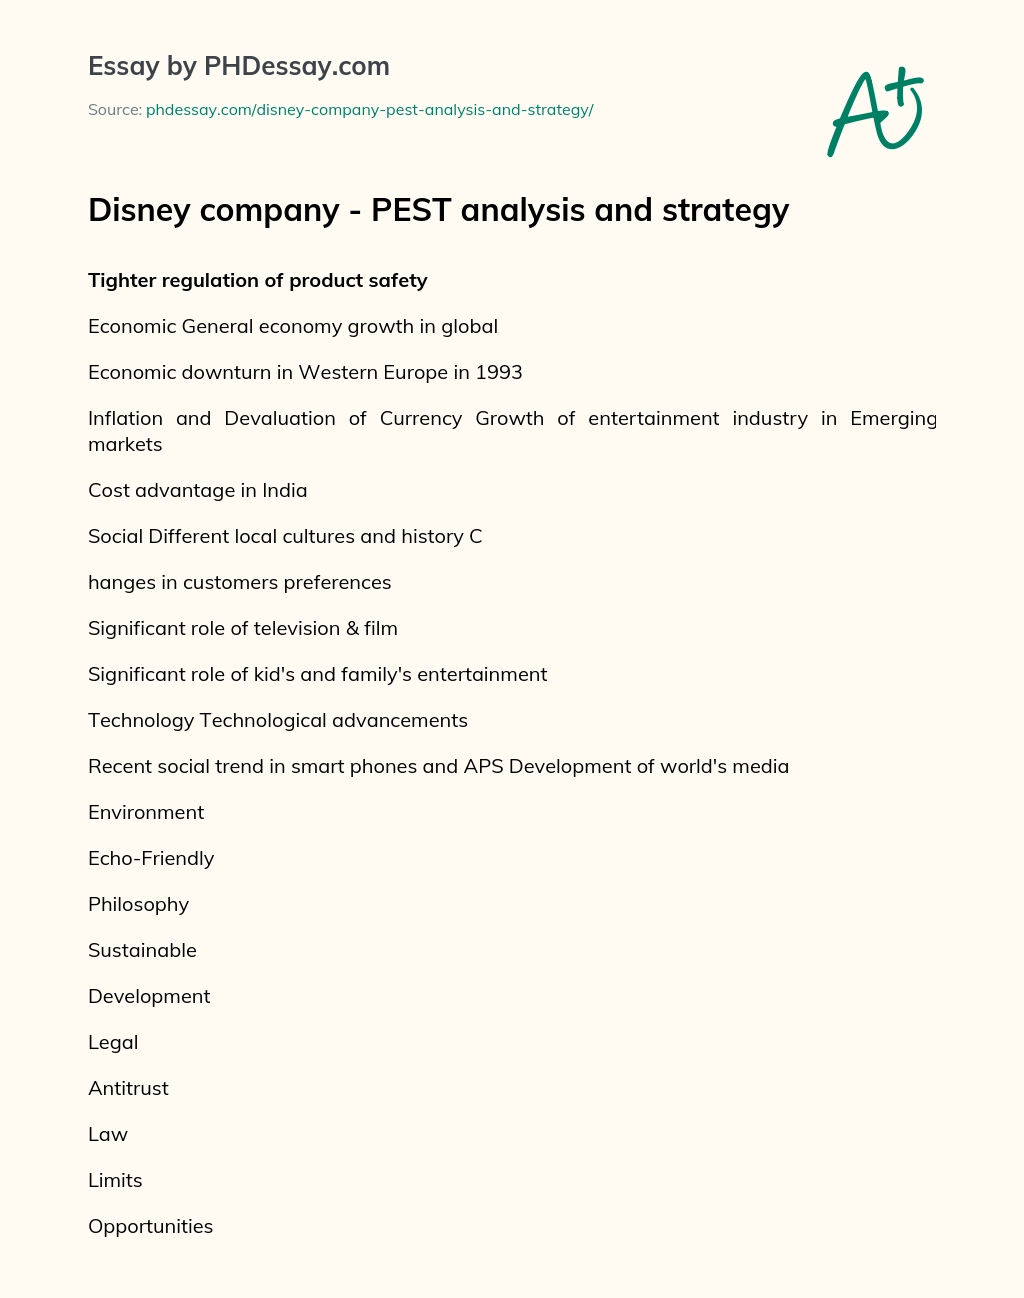 Disney company – PEST analysis and strategy essay